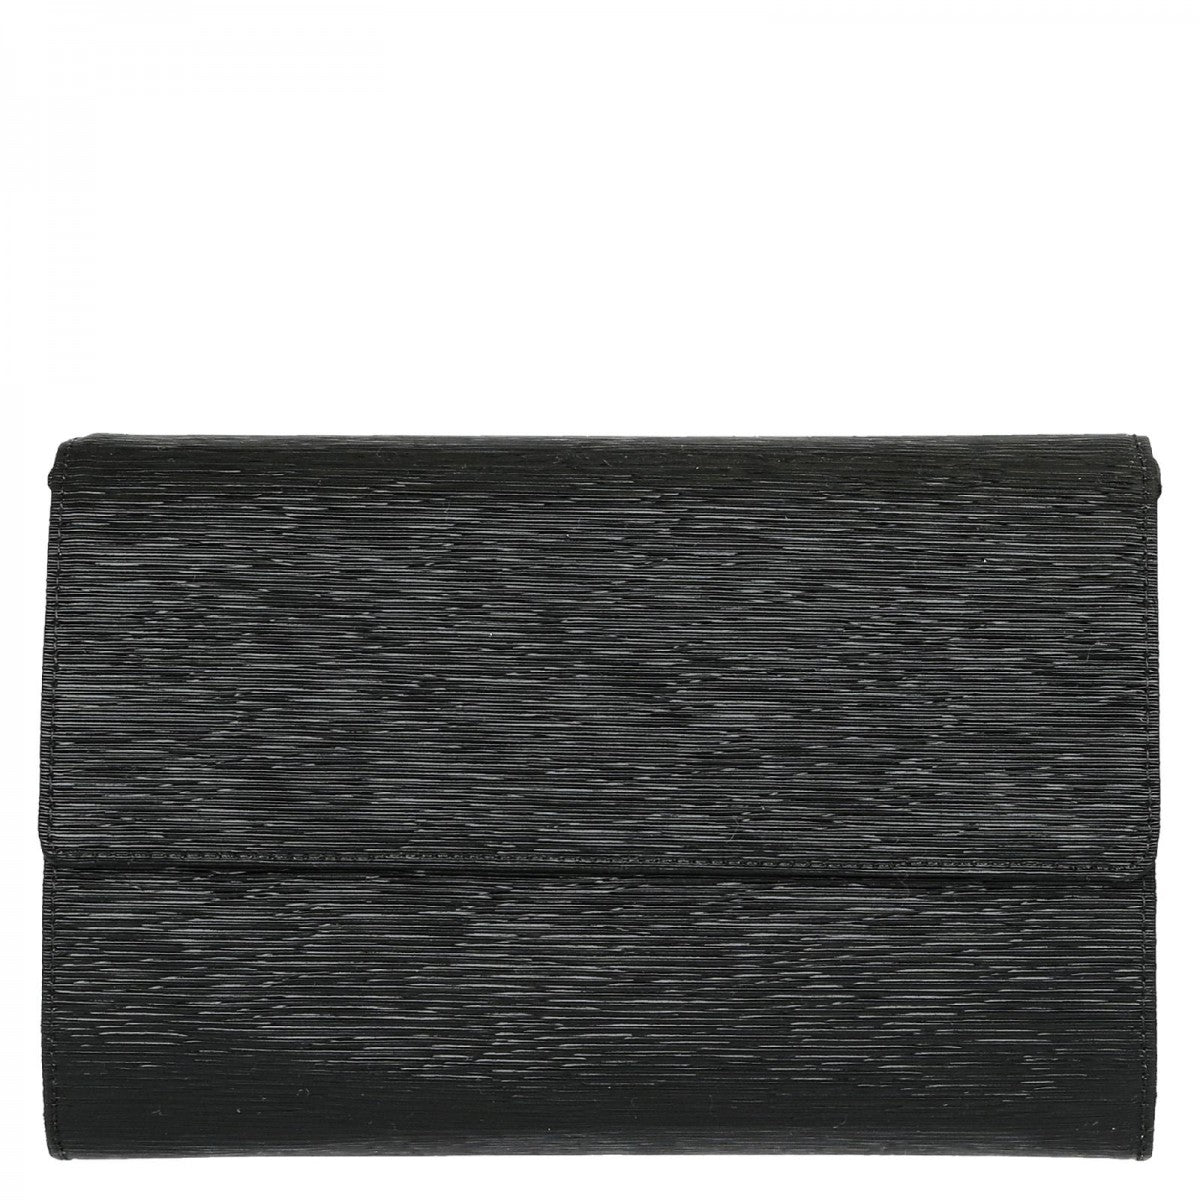 Pochette elegante nera in raso plissé Made in Italy